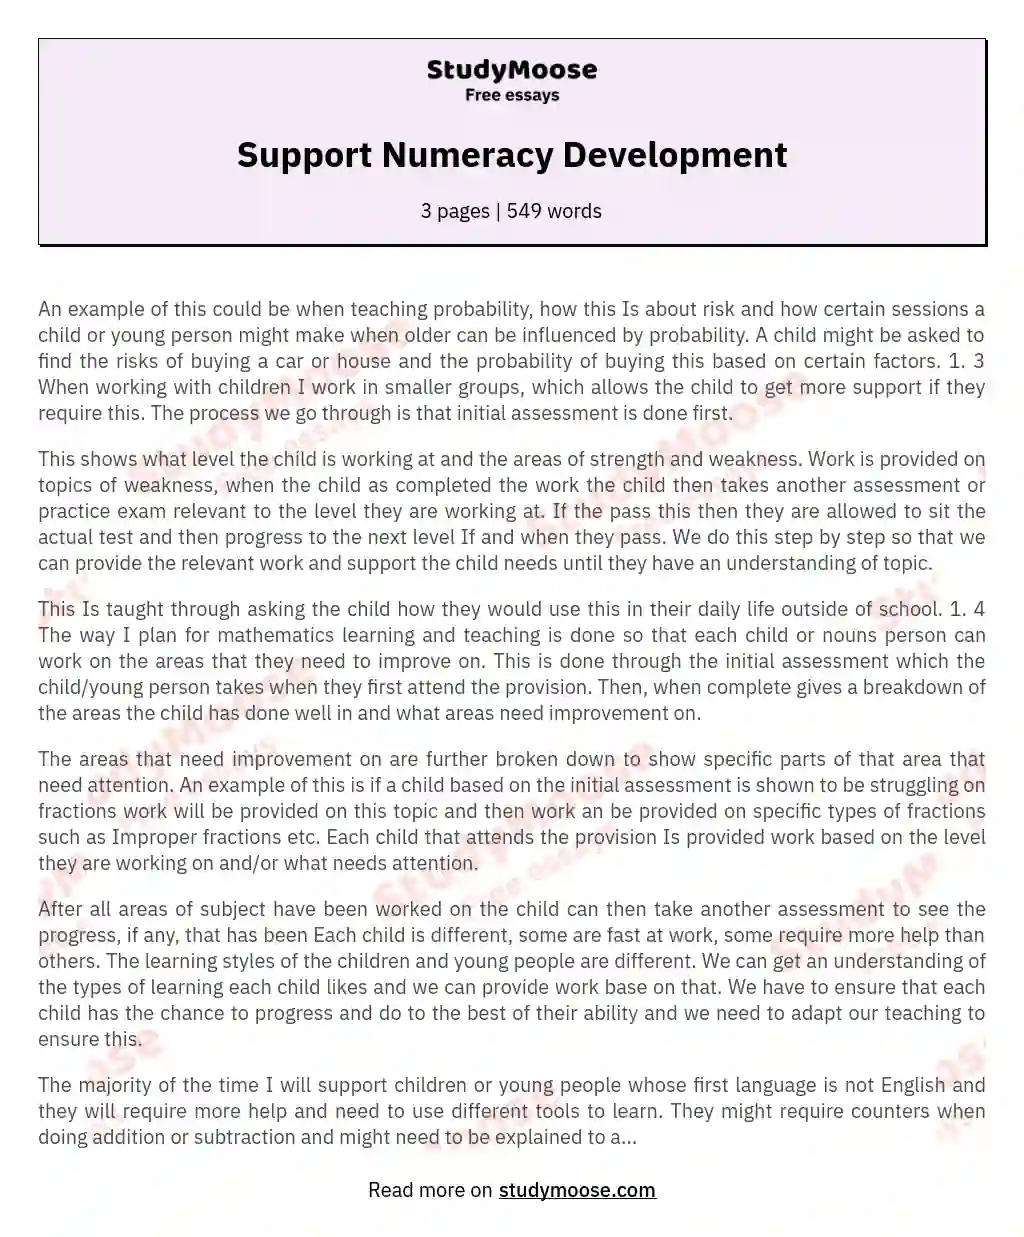 Support Numeracy Development essay